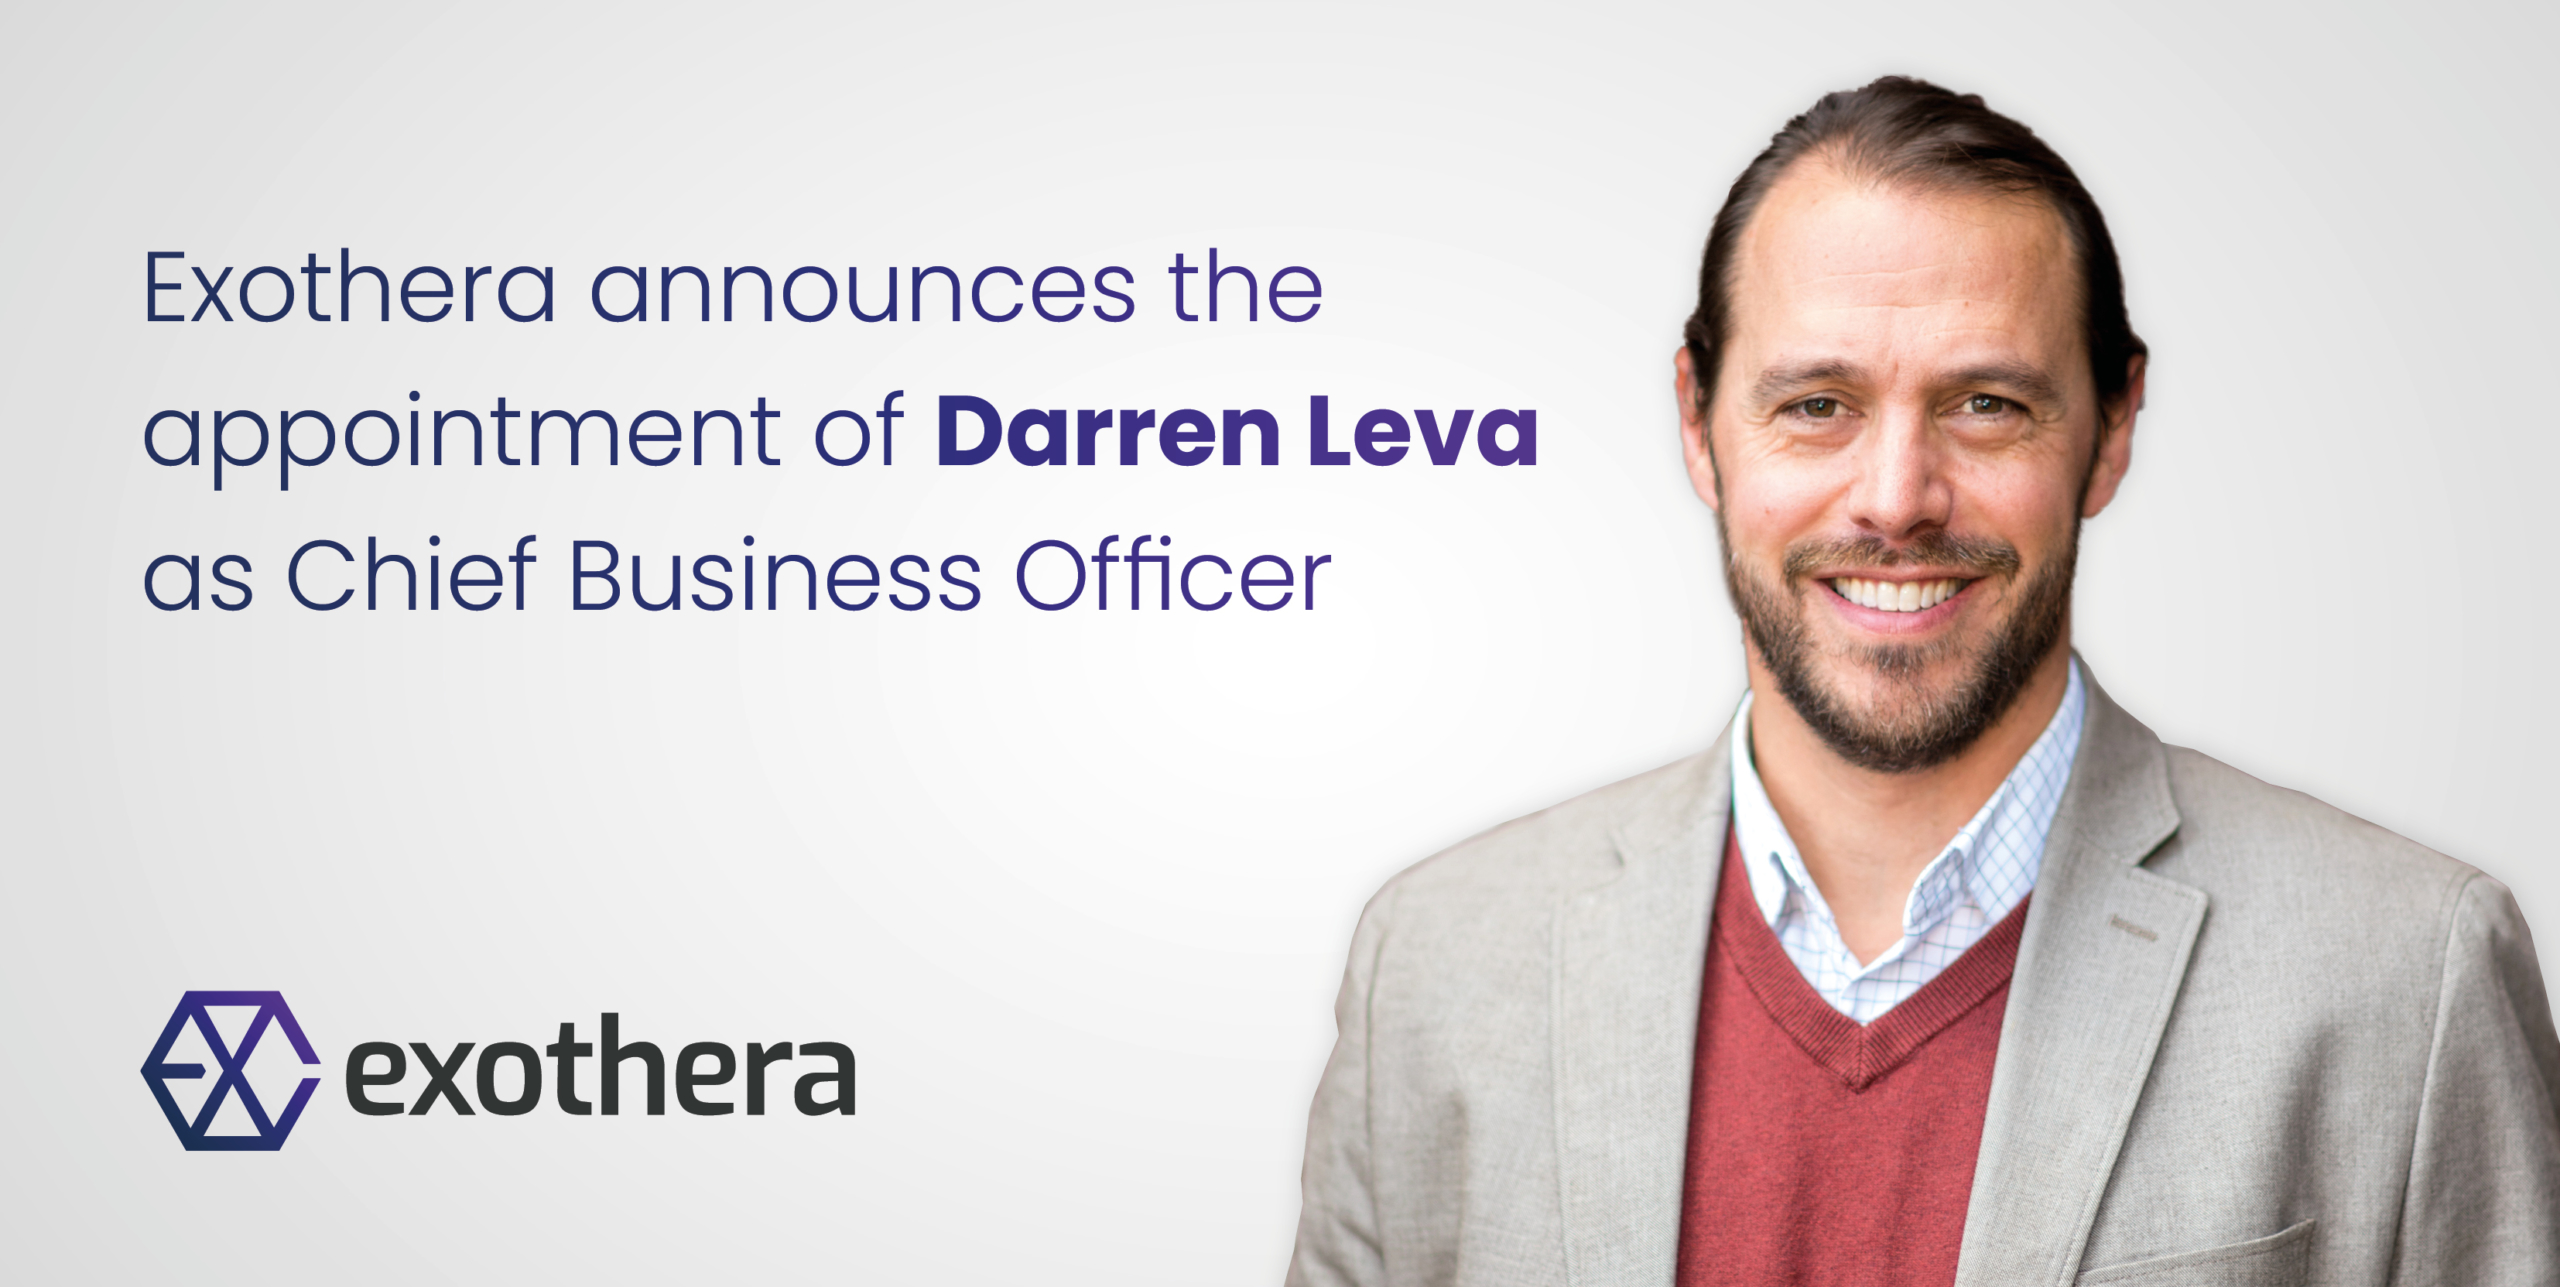 Darren Leva CBO at Exothera announced